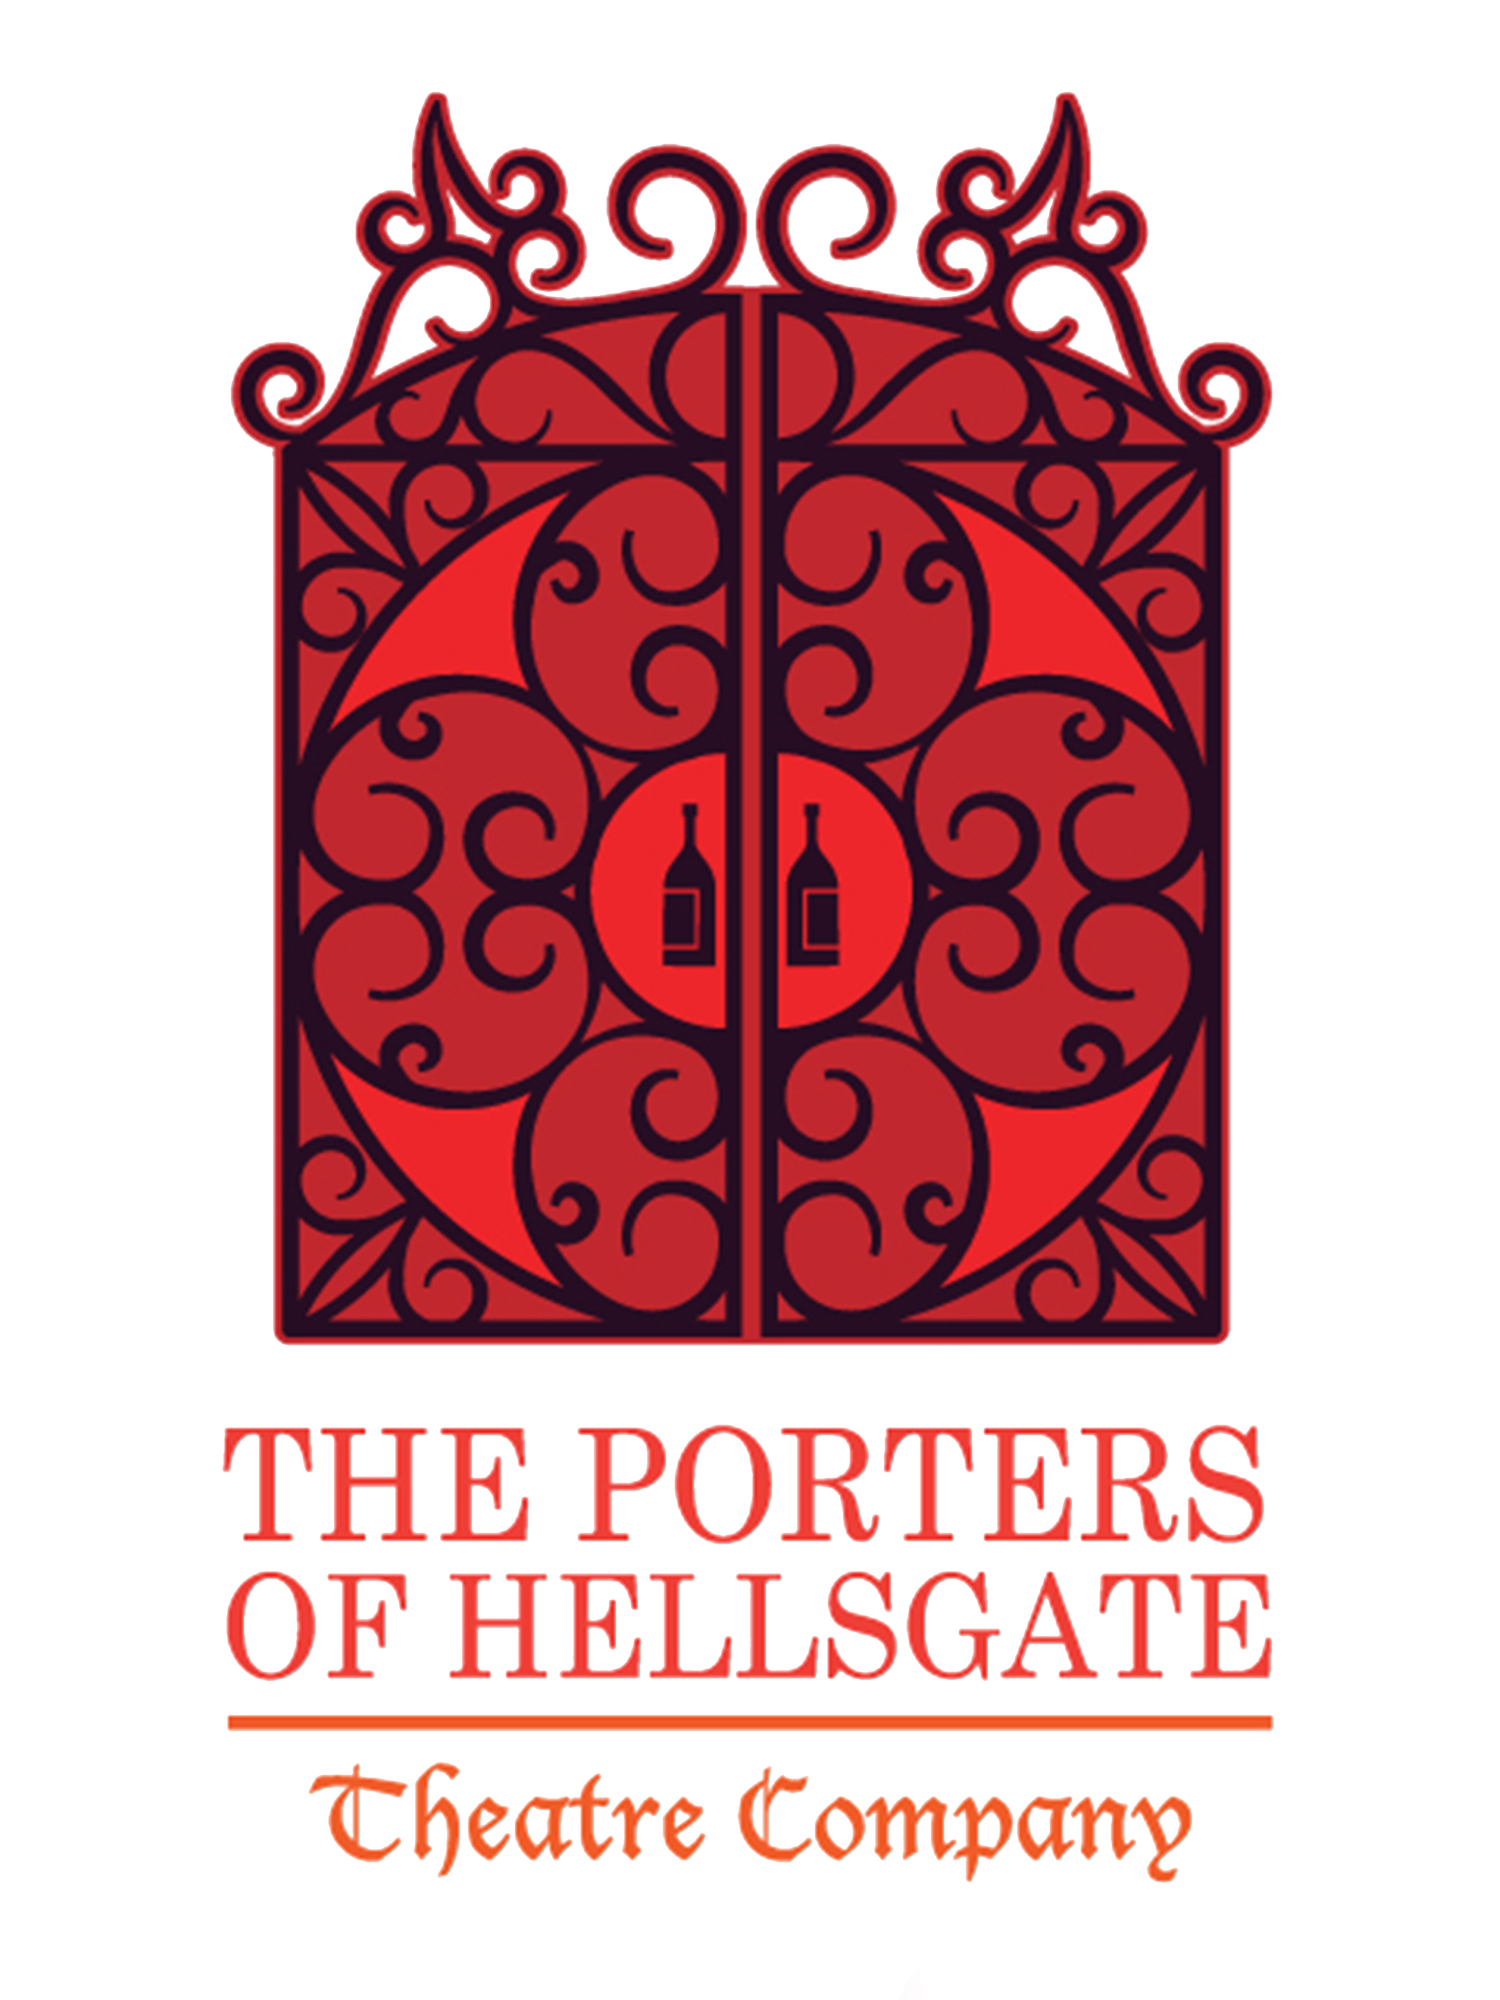 The Porters of Hellsgate Theatre Company